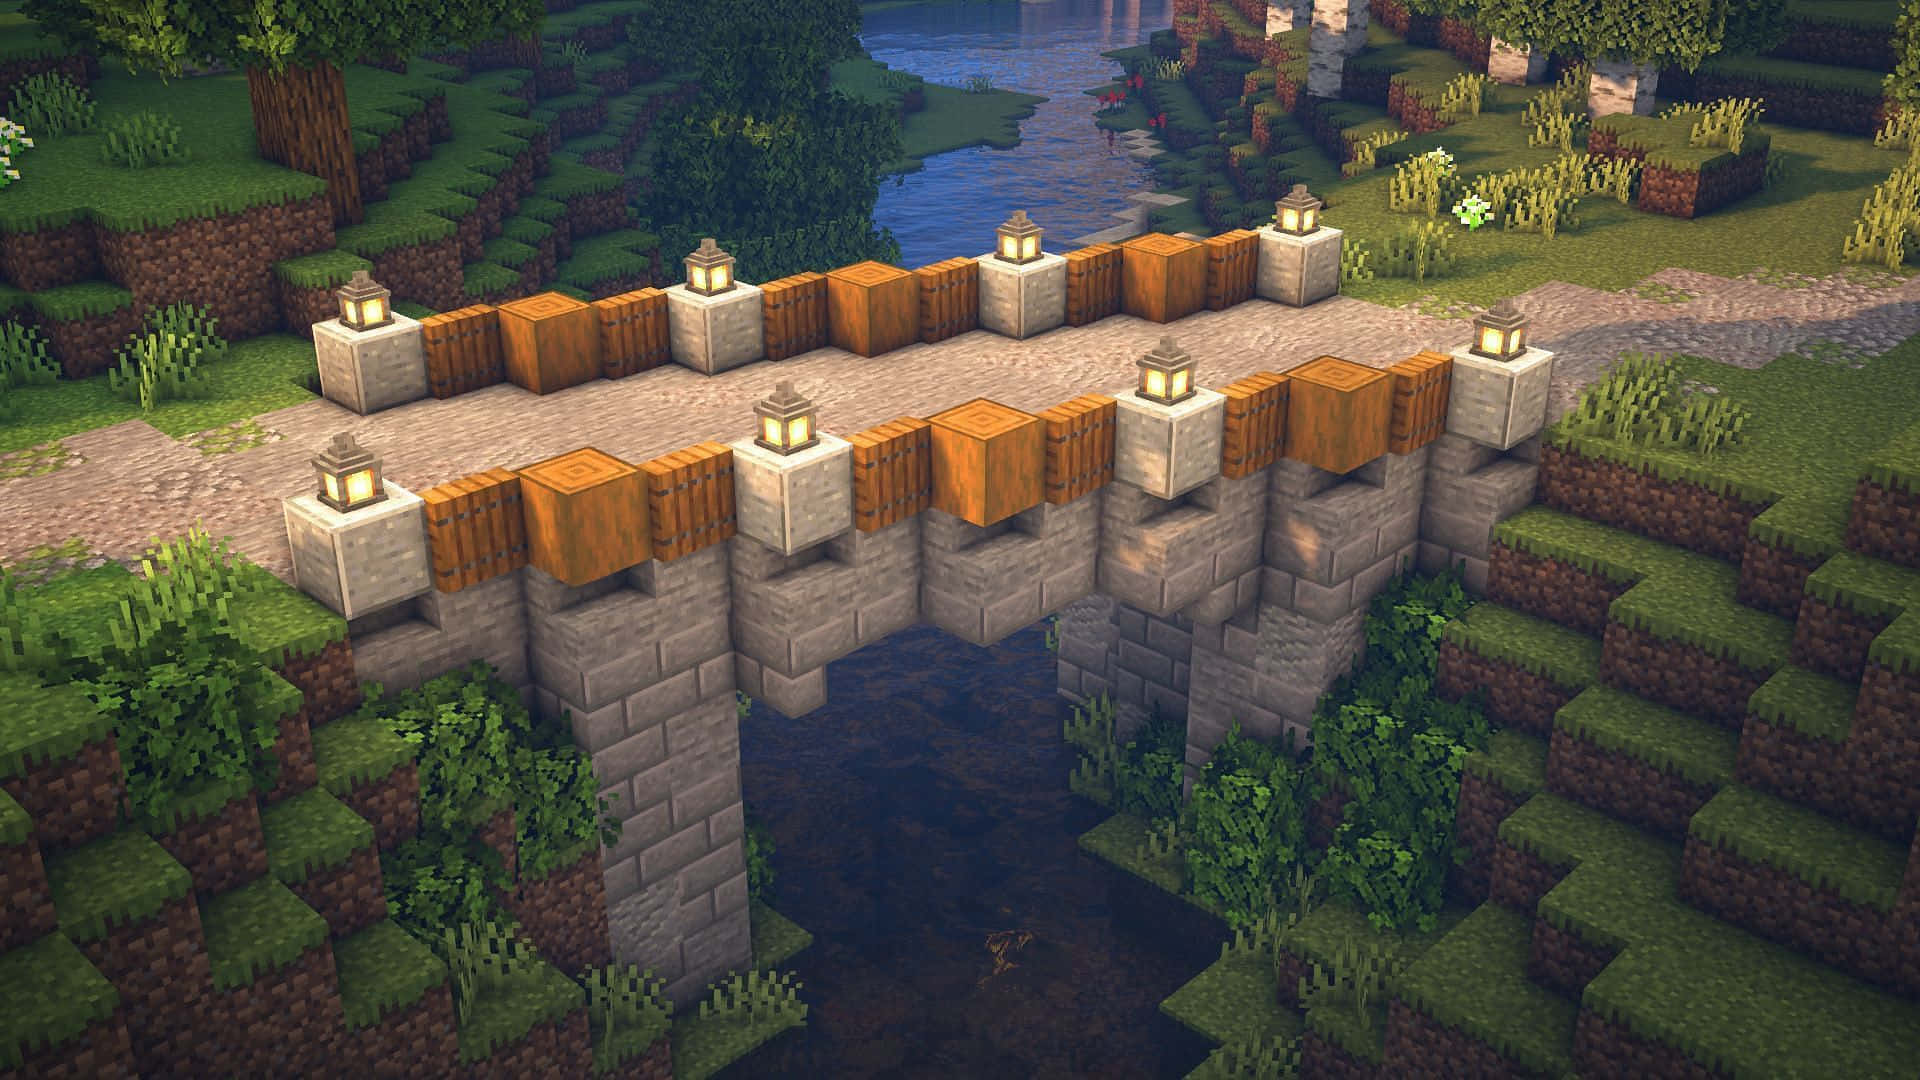 Majestic Minecraft Bridge at Sunset Wallpaper